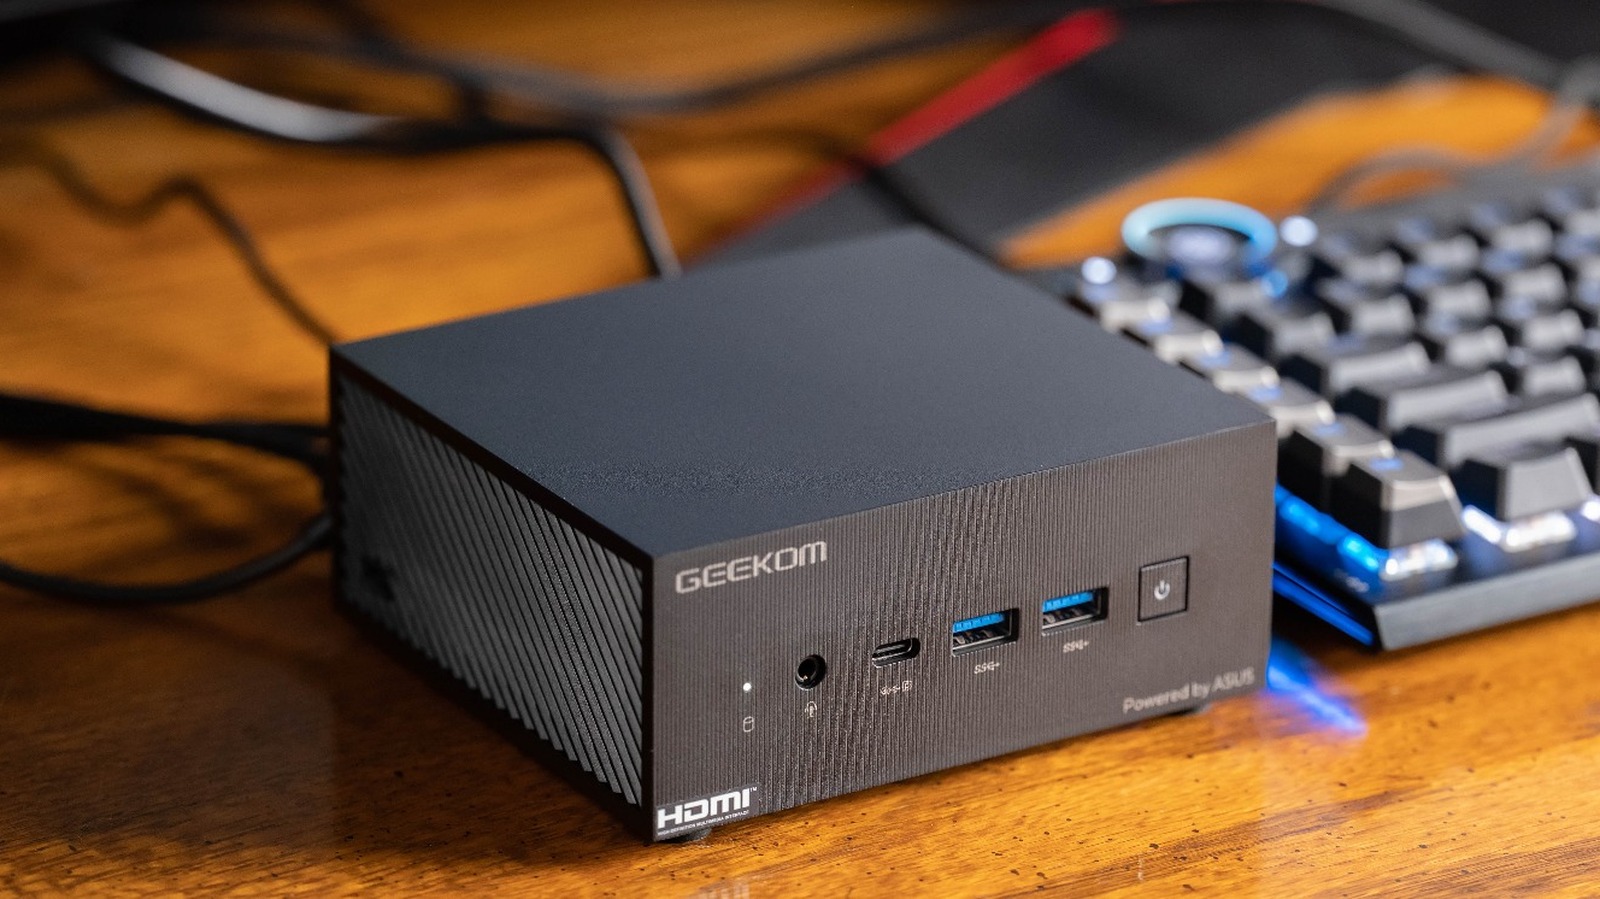 Geekom AS 6 Review: Desktop Power In A Pocket-Sized PC